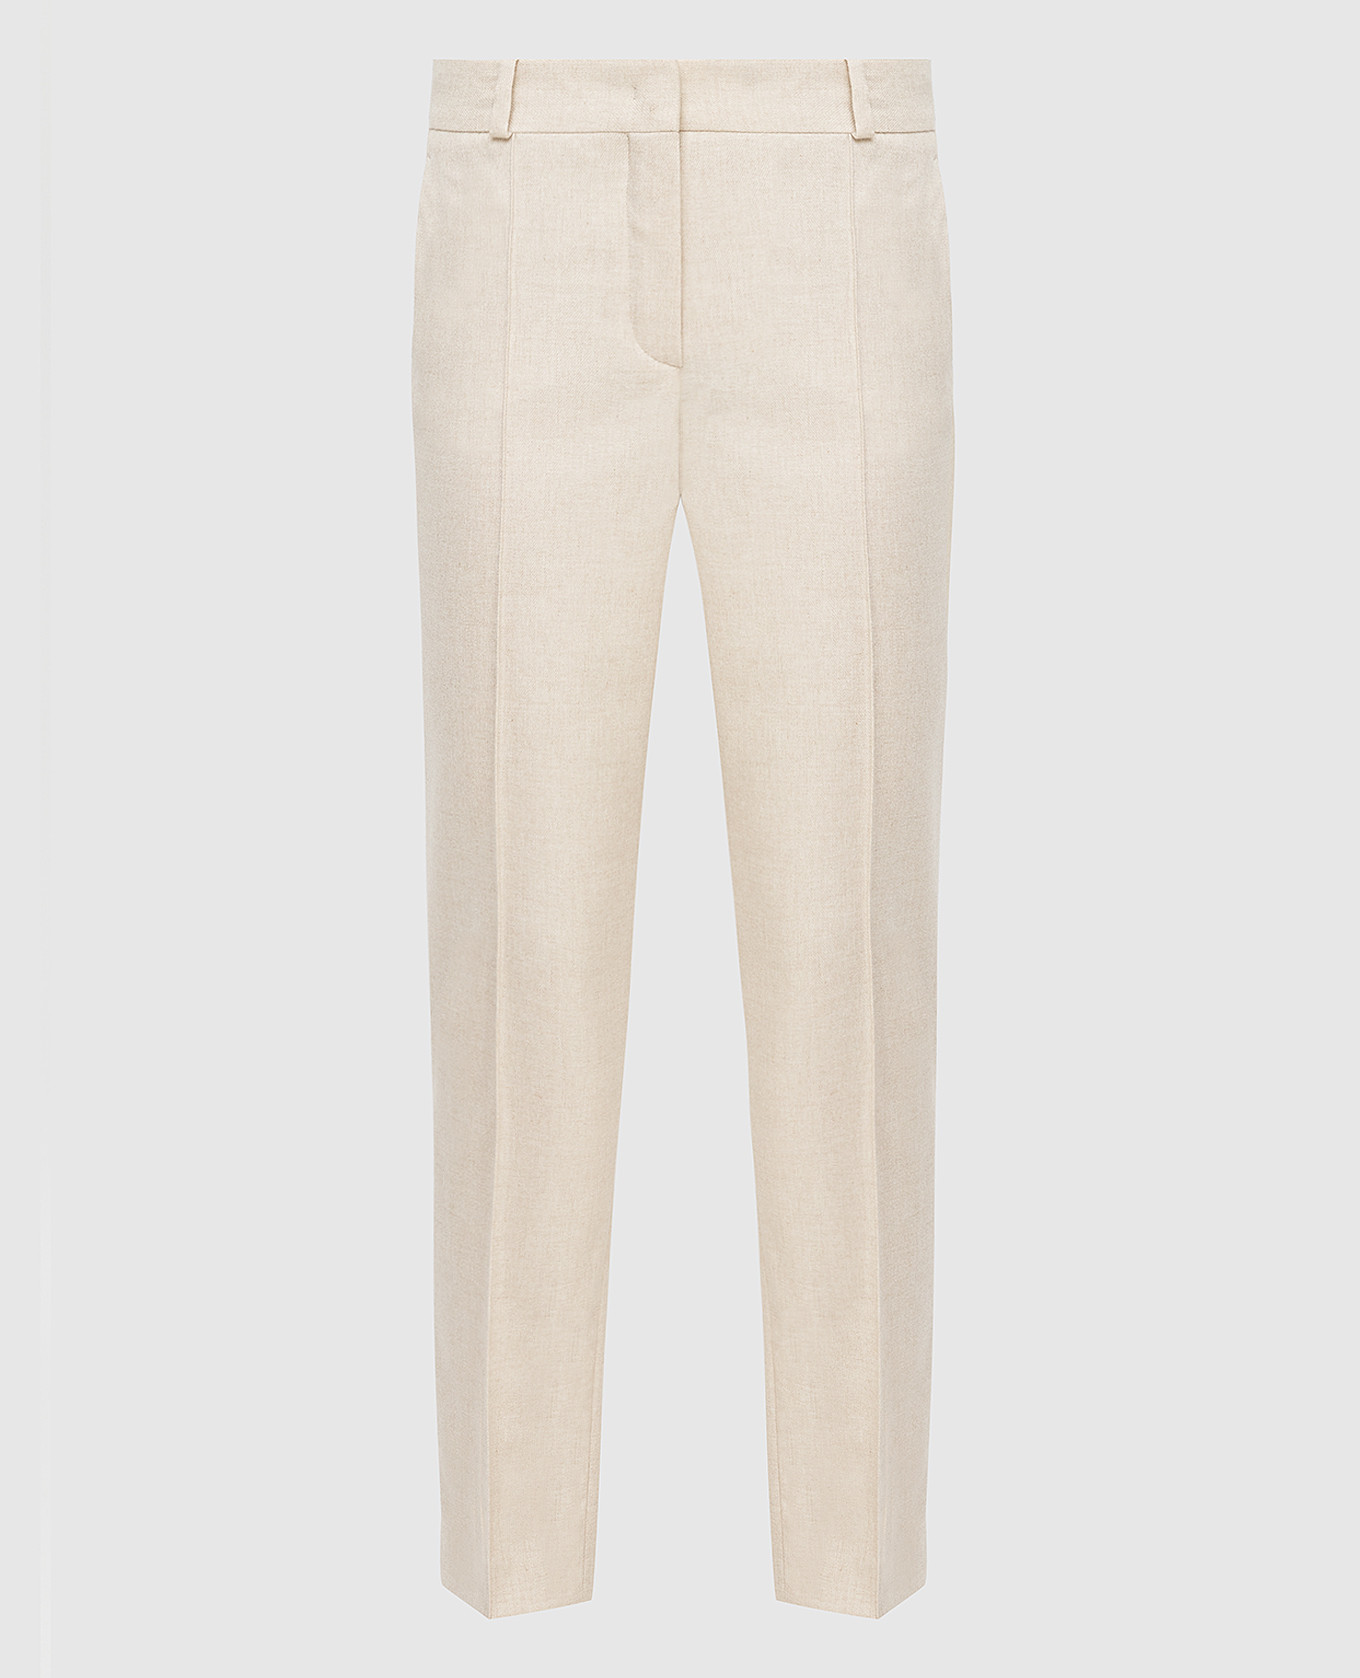 Light beige cashmere trousers